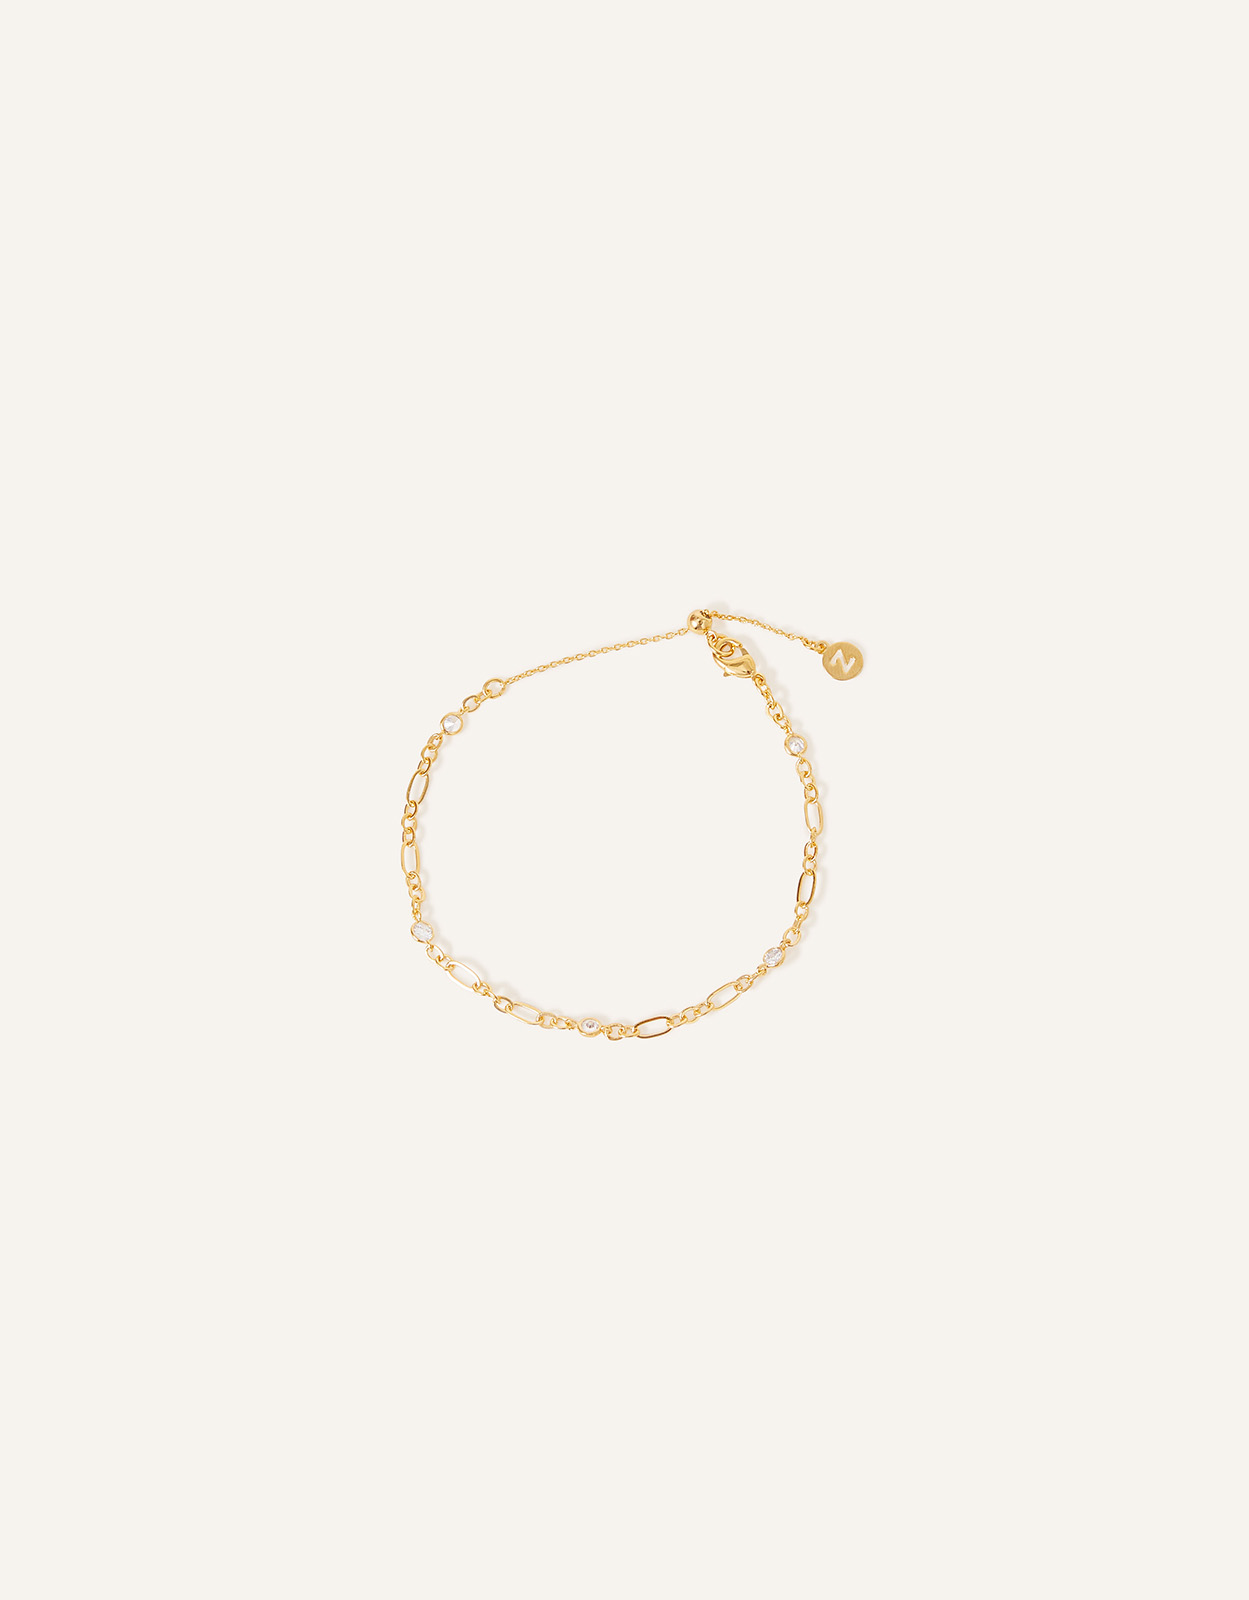 Accessorize Women's 14ct Gold-Plated Sparkle Chain Bracelet